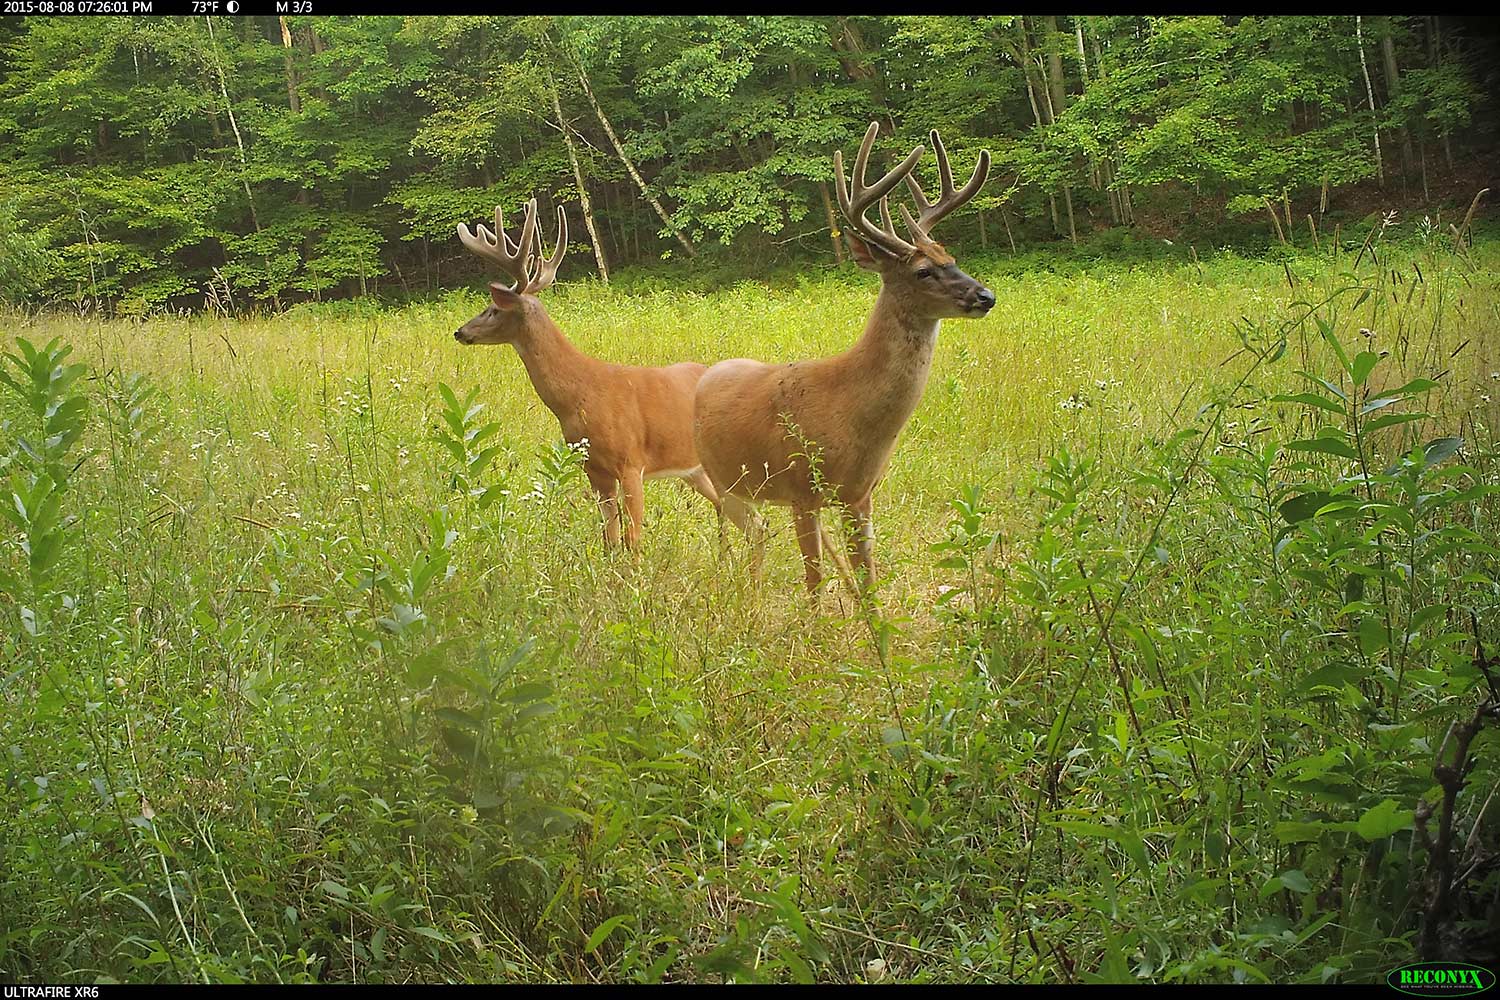 two bucks standing in a field of grass